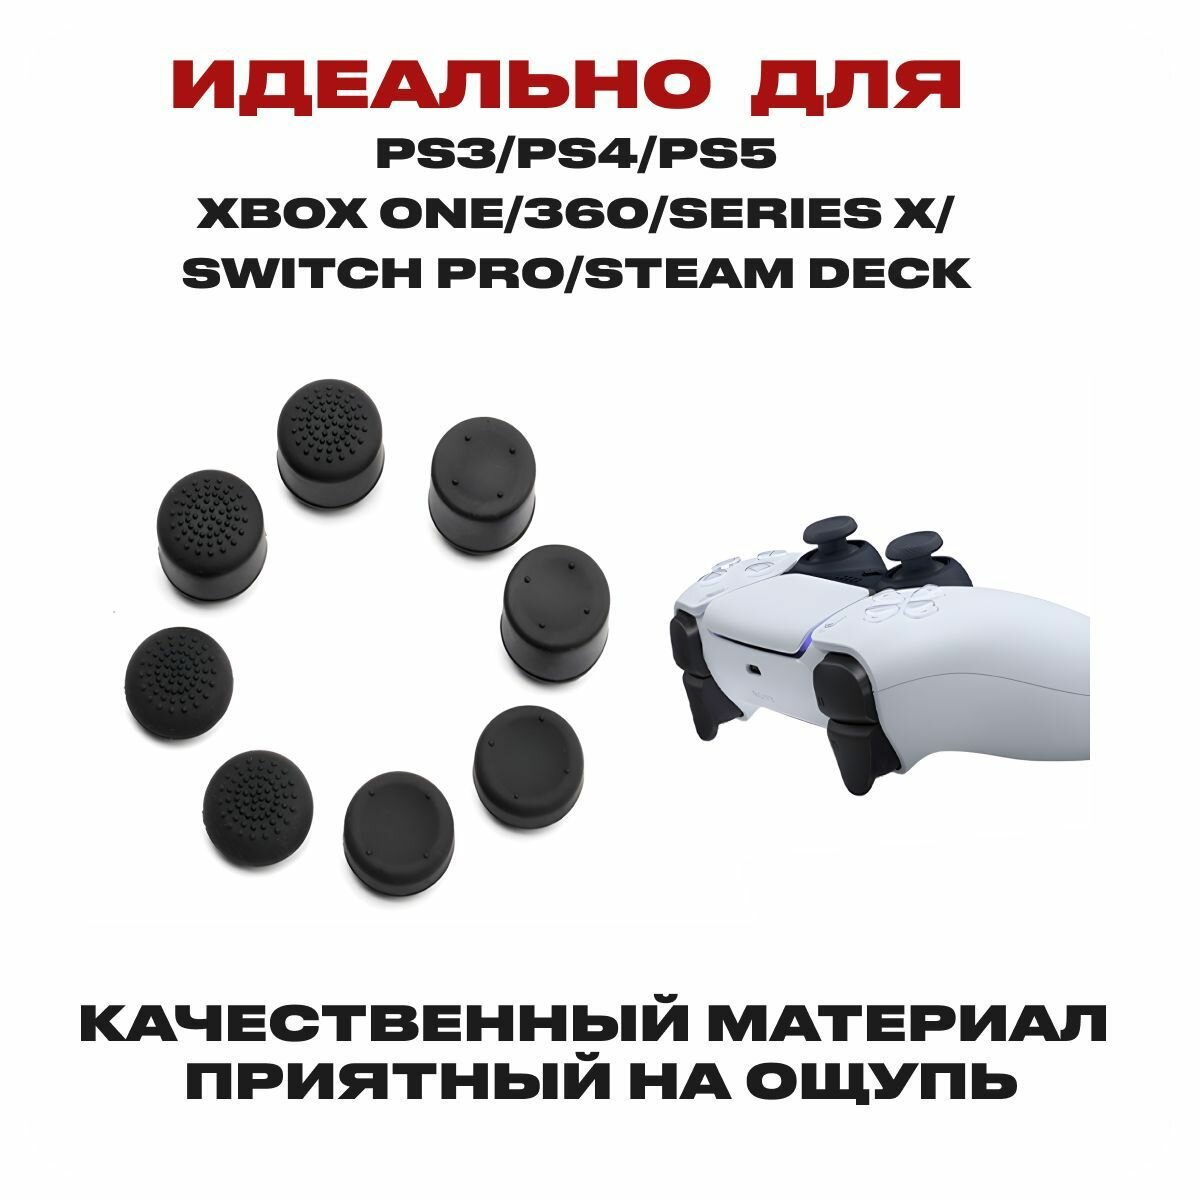 Накладки на стики 8 шт. для геймпада для плейстейшен ps3; ps4; ps5; XBOX; пс4; пс5; икс бокс, аксессуар для контроллера